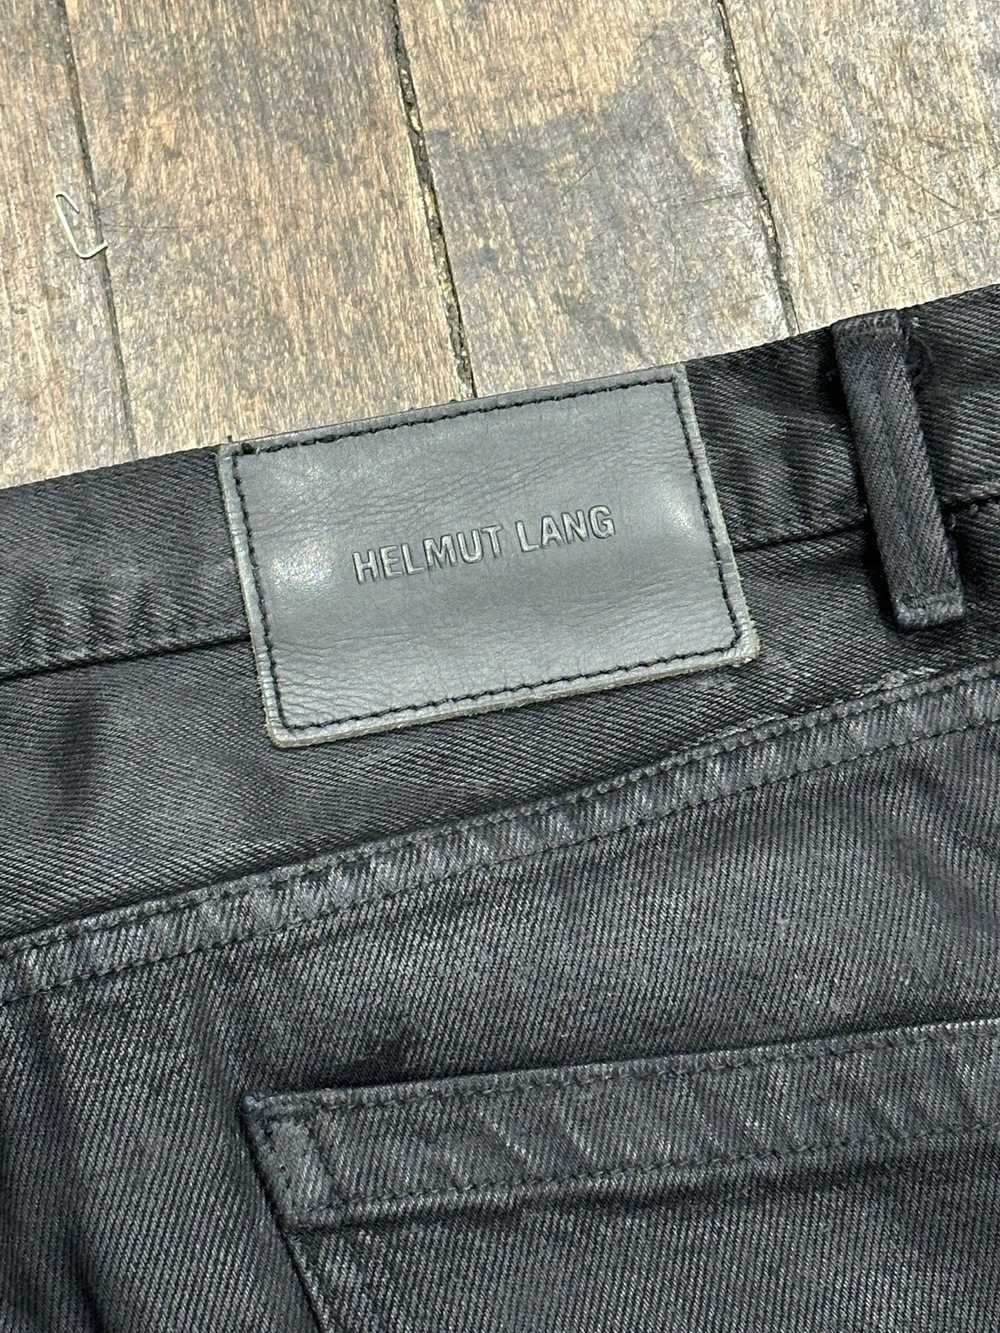 Helmut Lang Helmut Lang Waxed Denim Jeans Size 36… - image 3